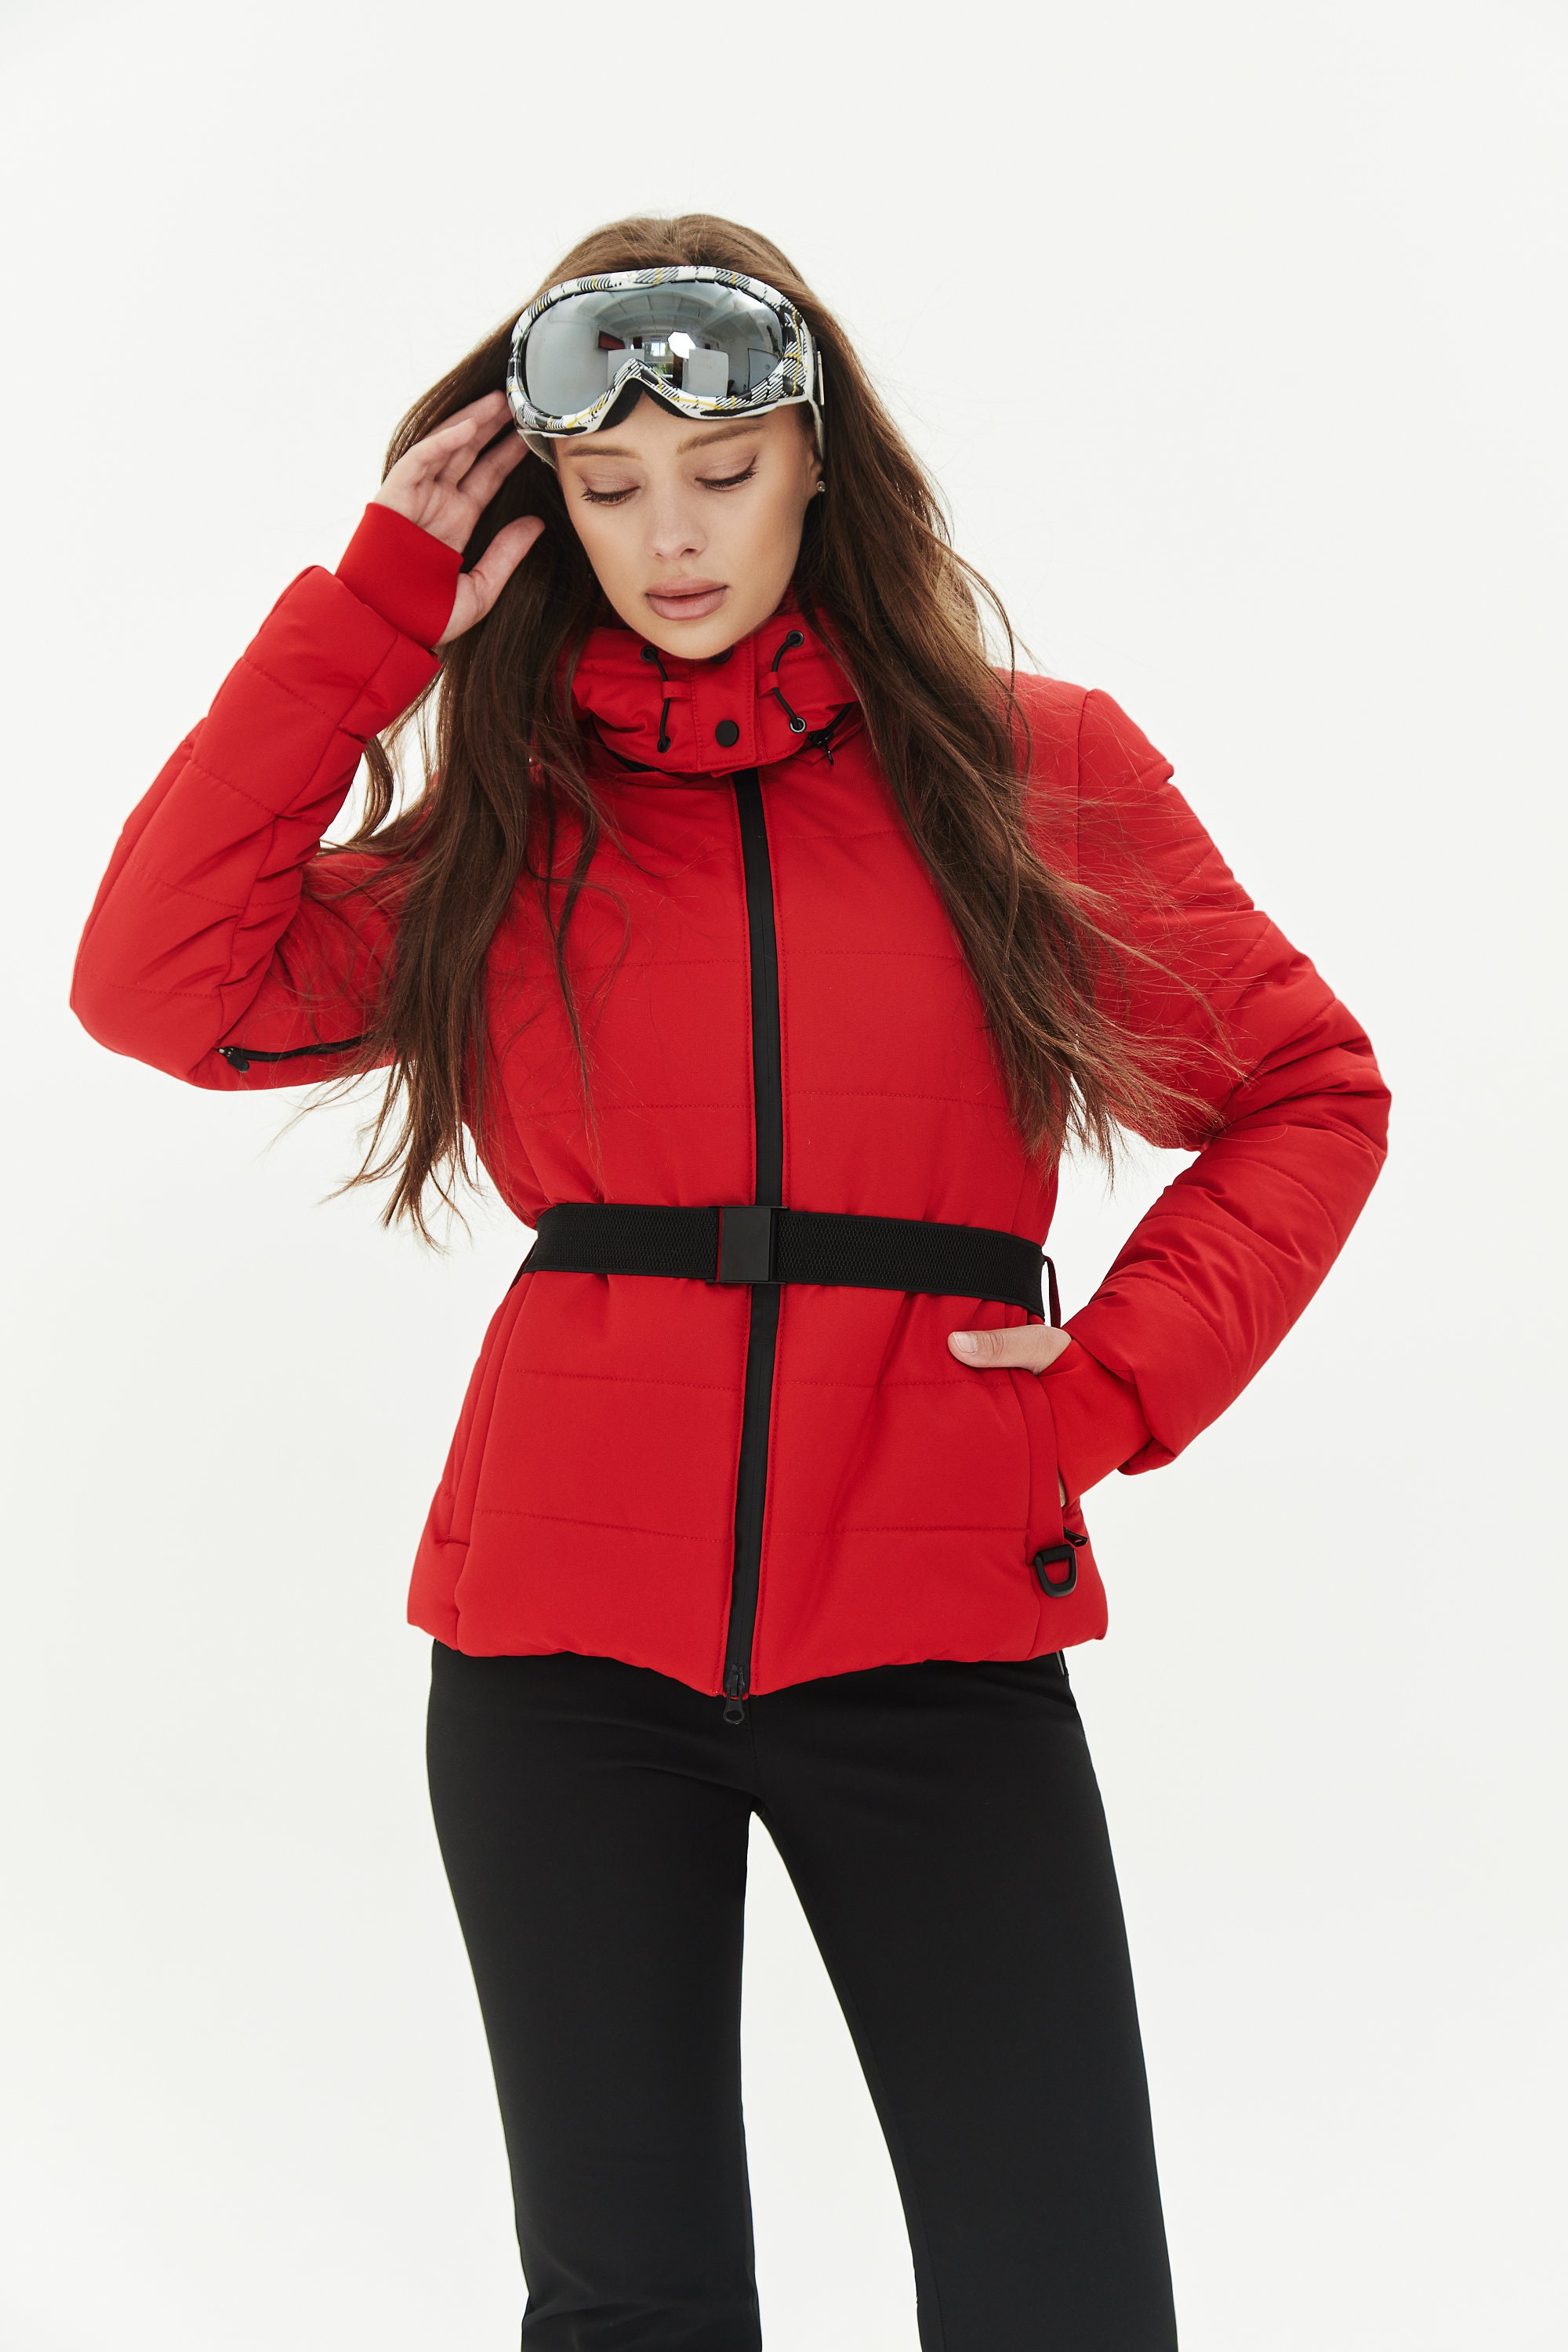 Winter Activewear Red Ski Jacket and Black Pants Two Piece Ski